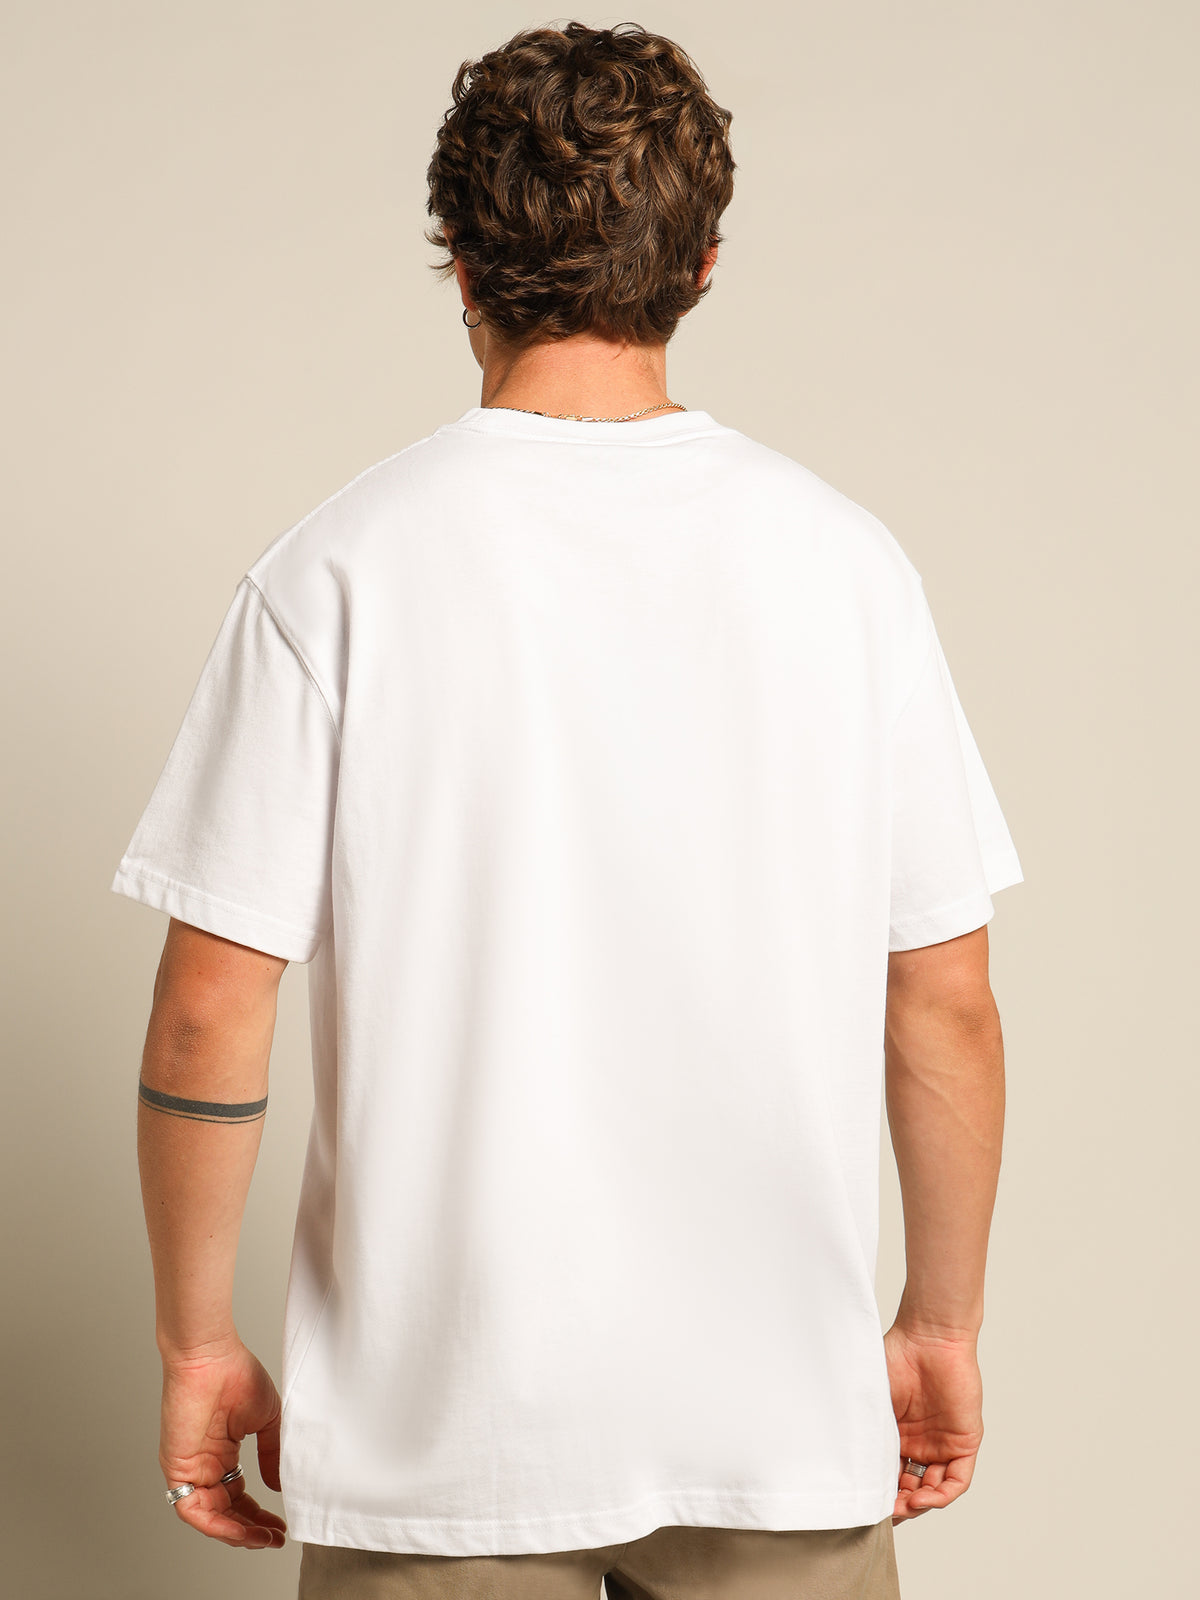 WS450 Heavyweight T-Shirt in White